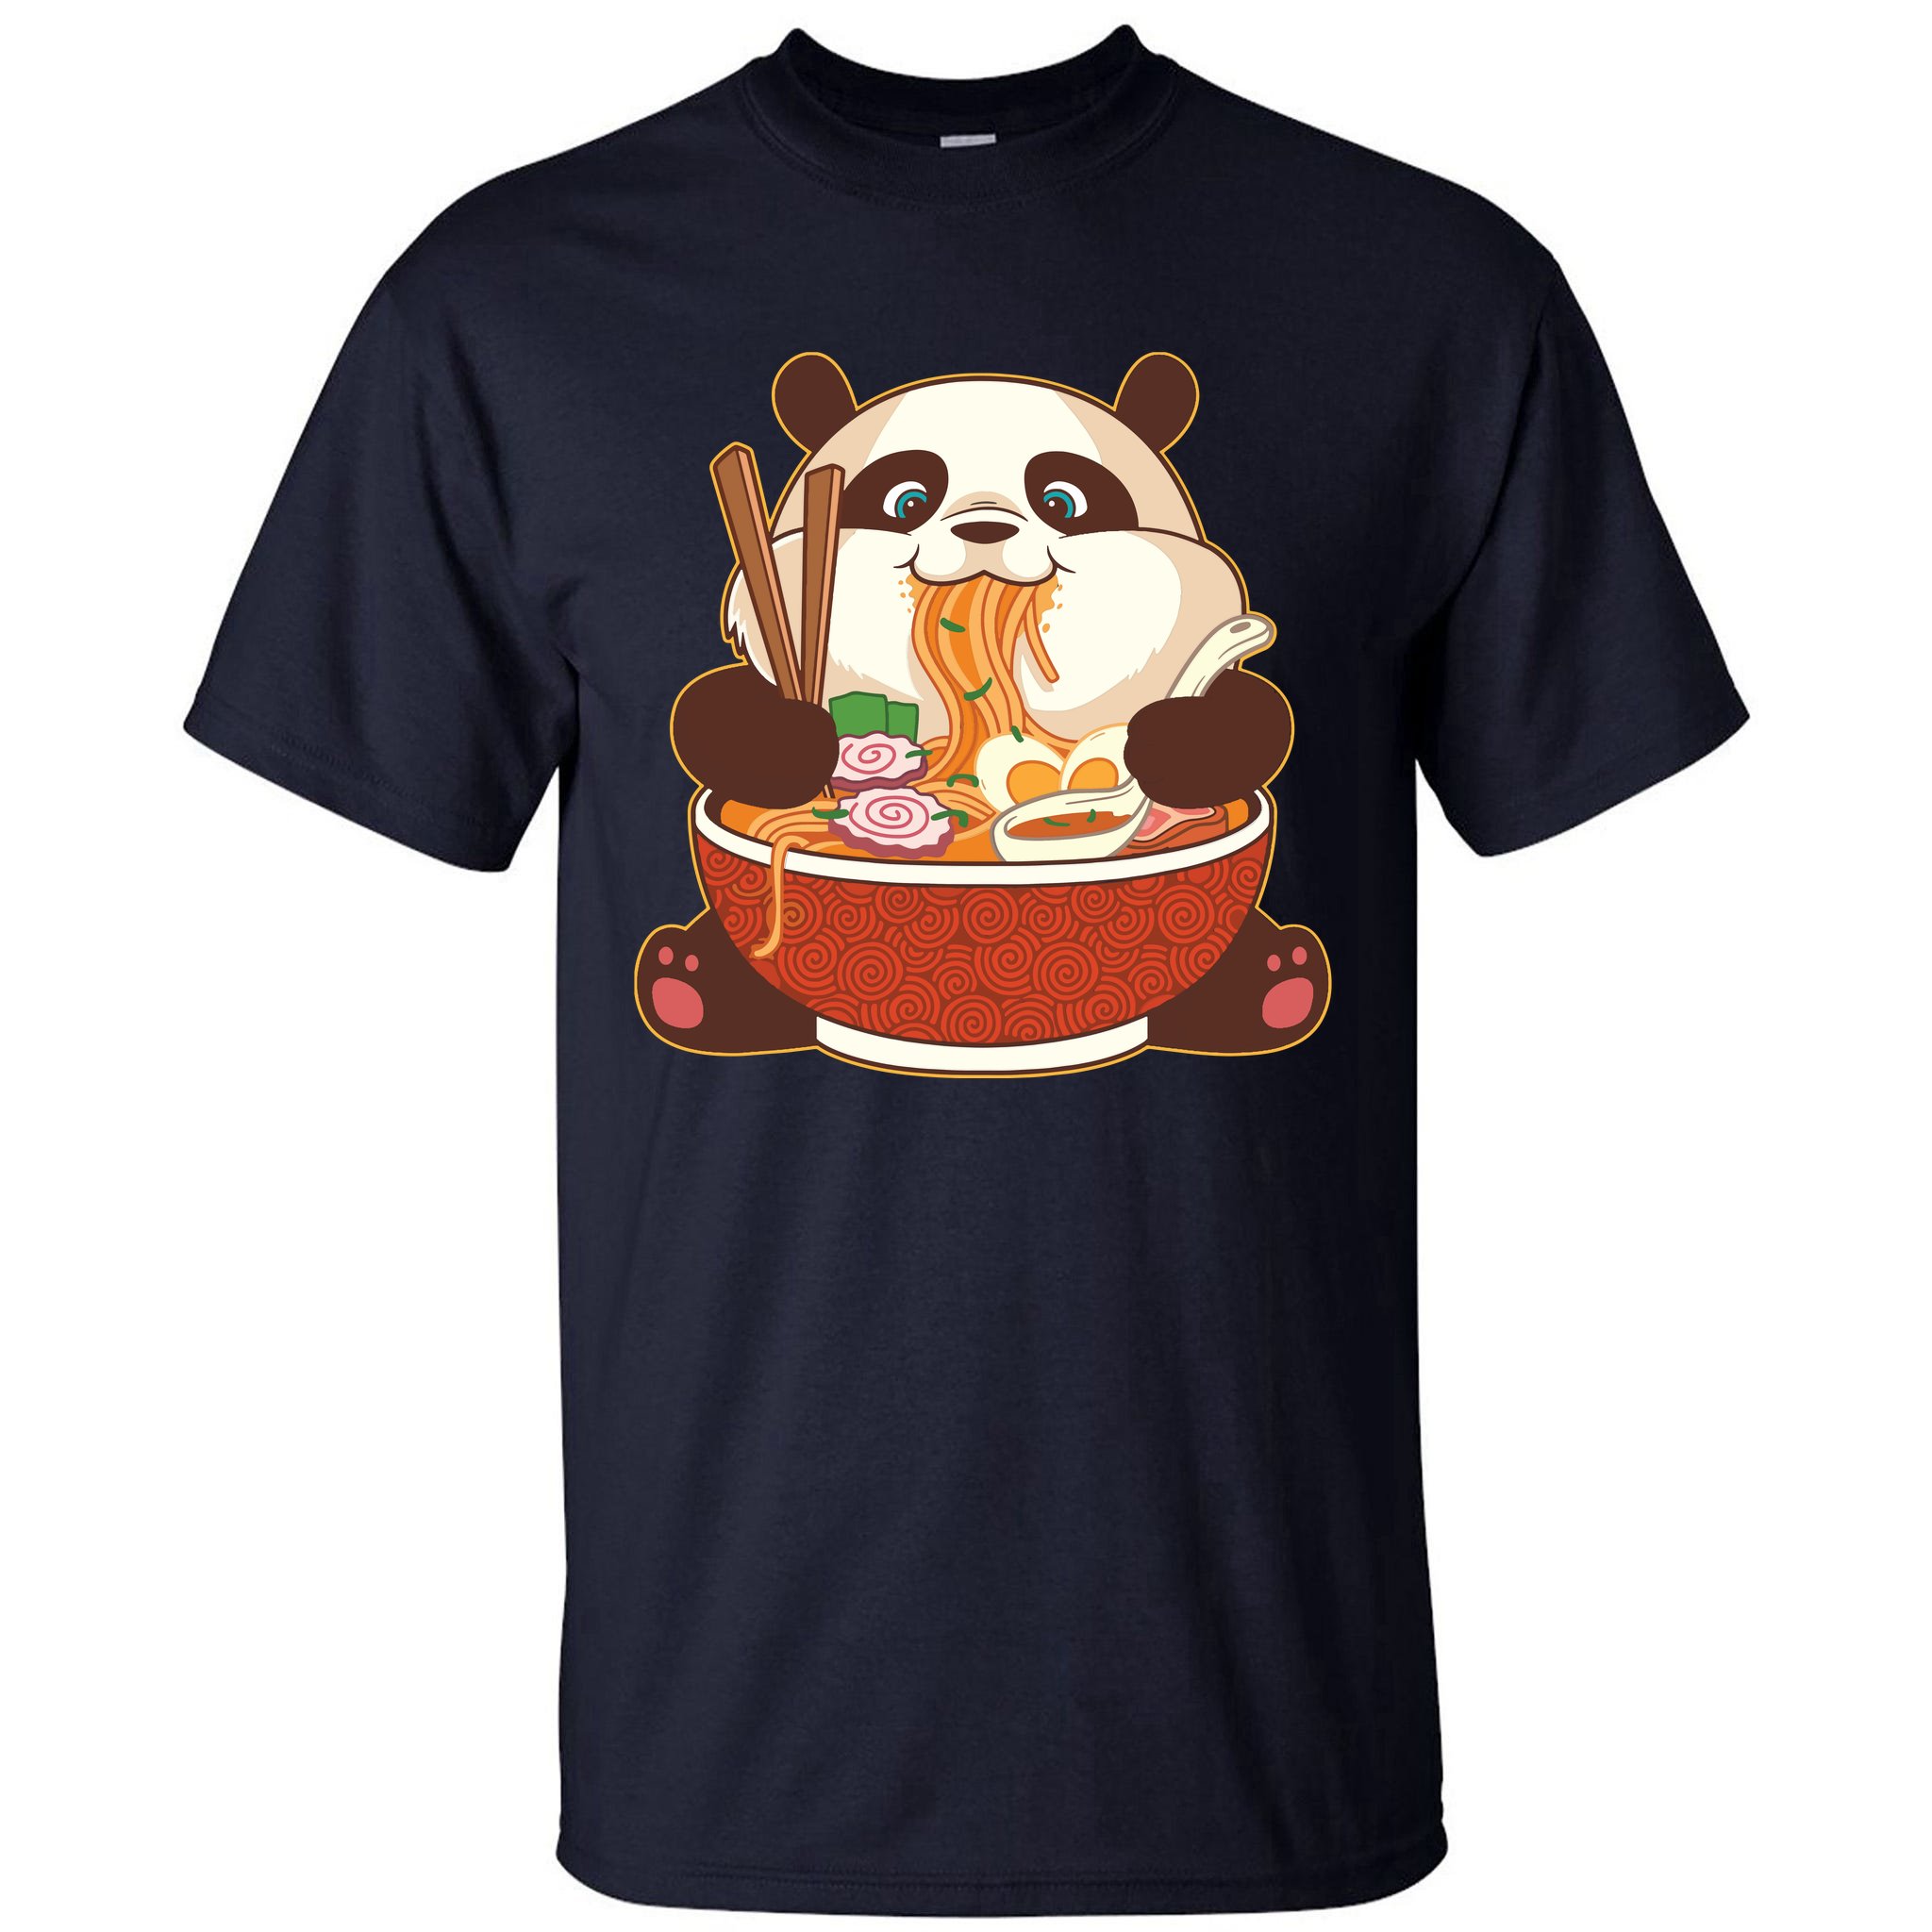 Cute Sad Panda: Piteous Panda, A Mirthless Mien